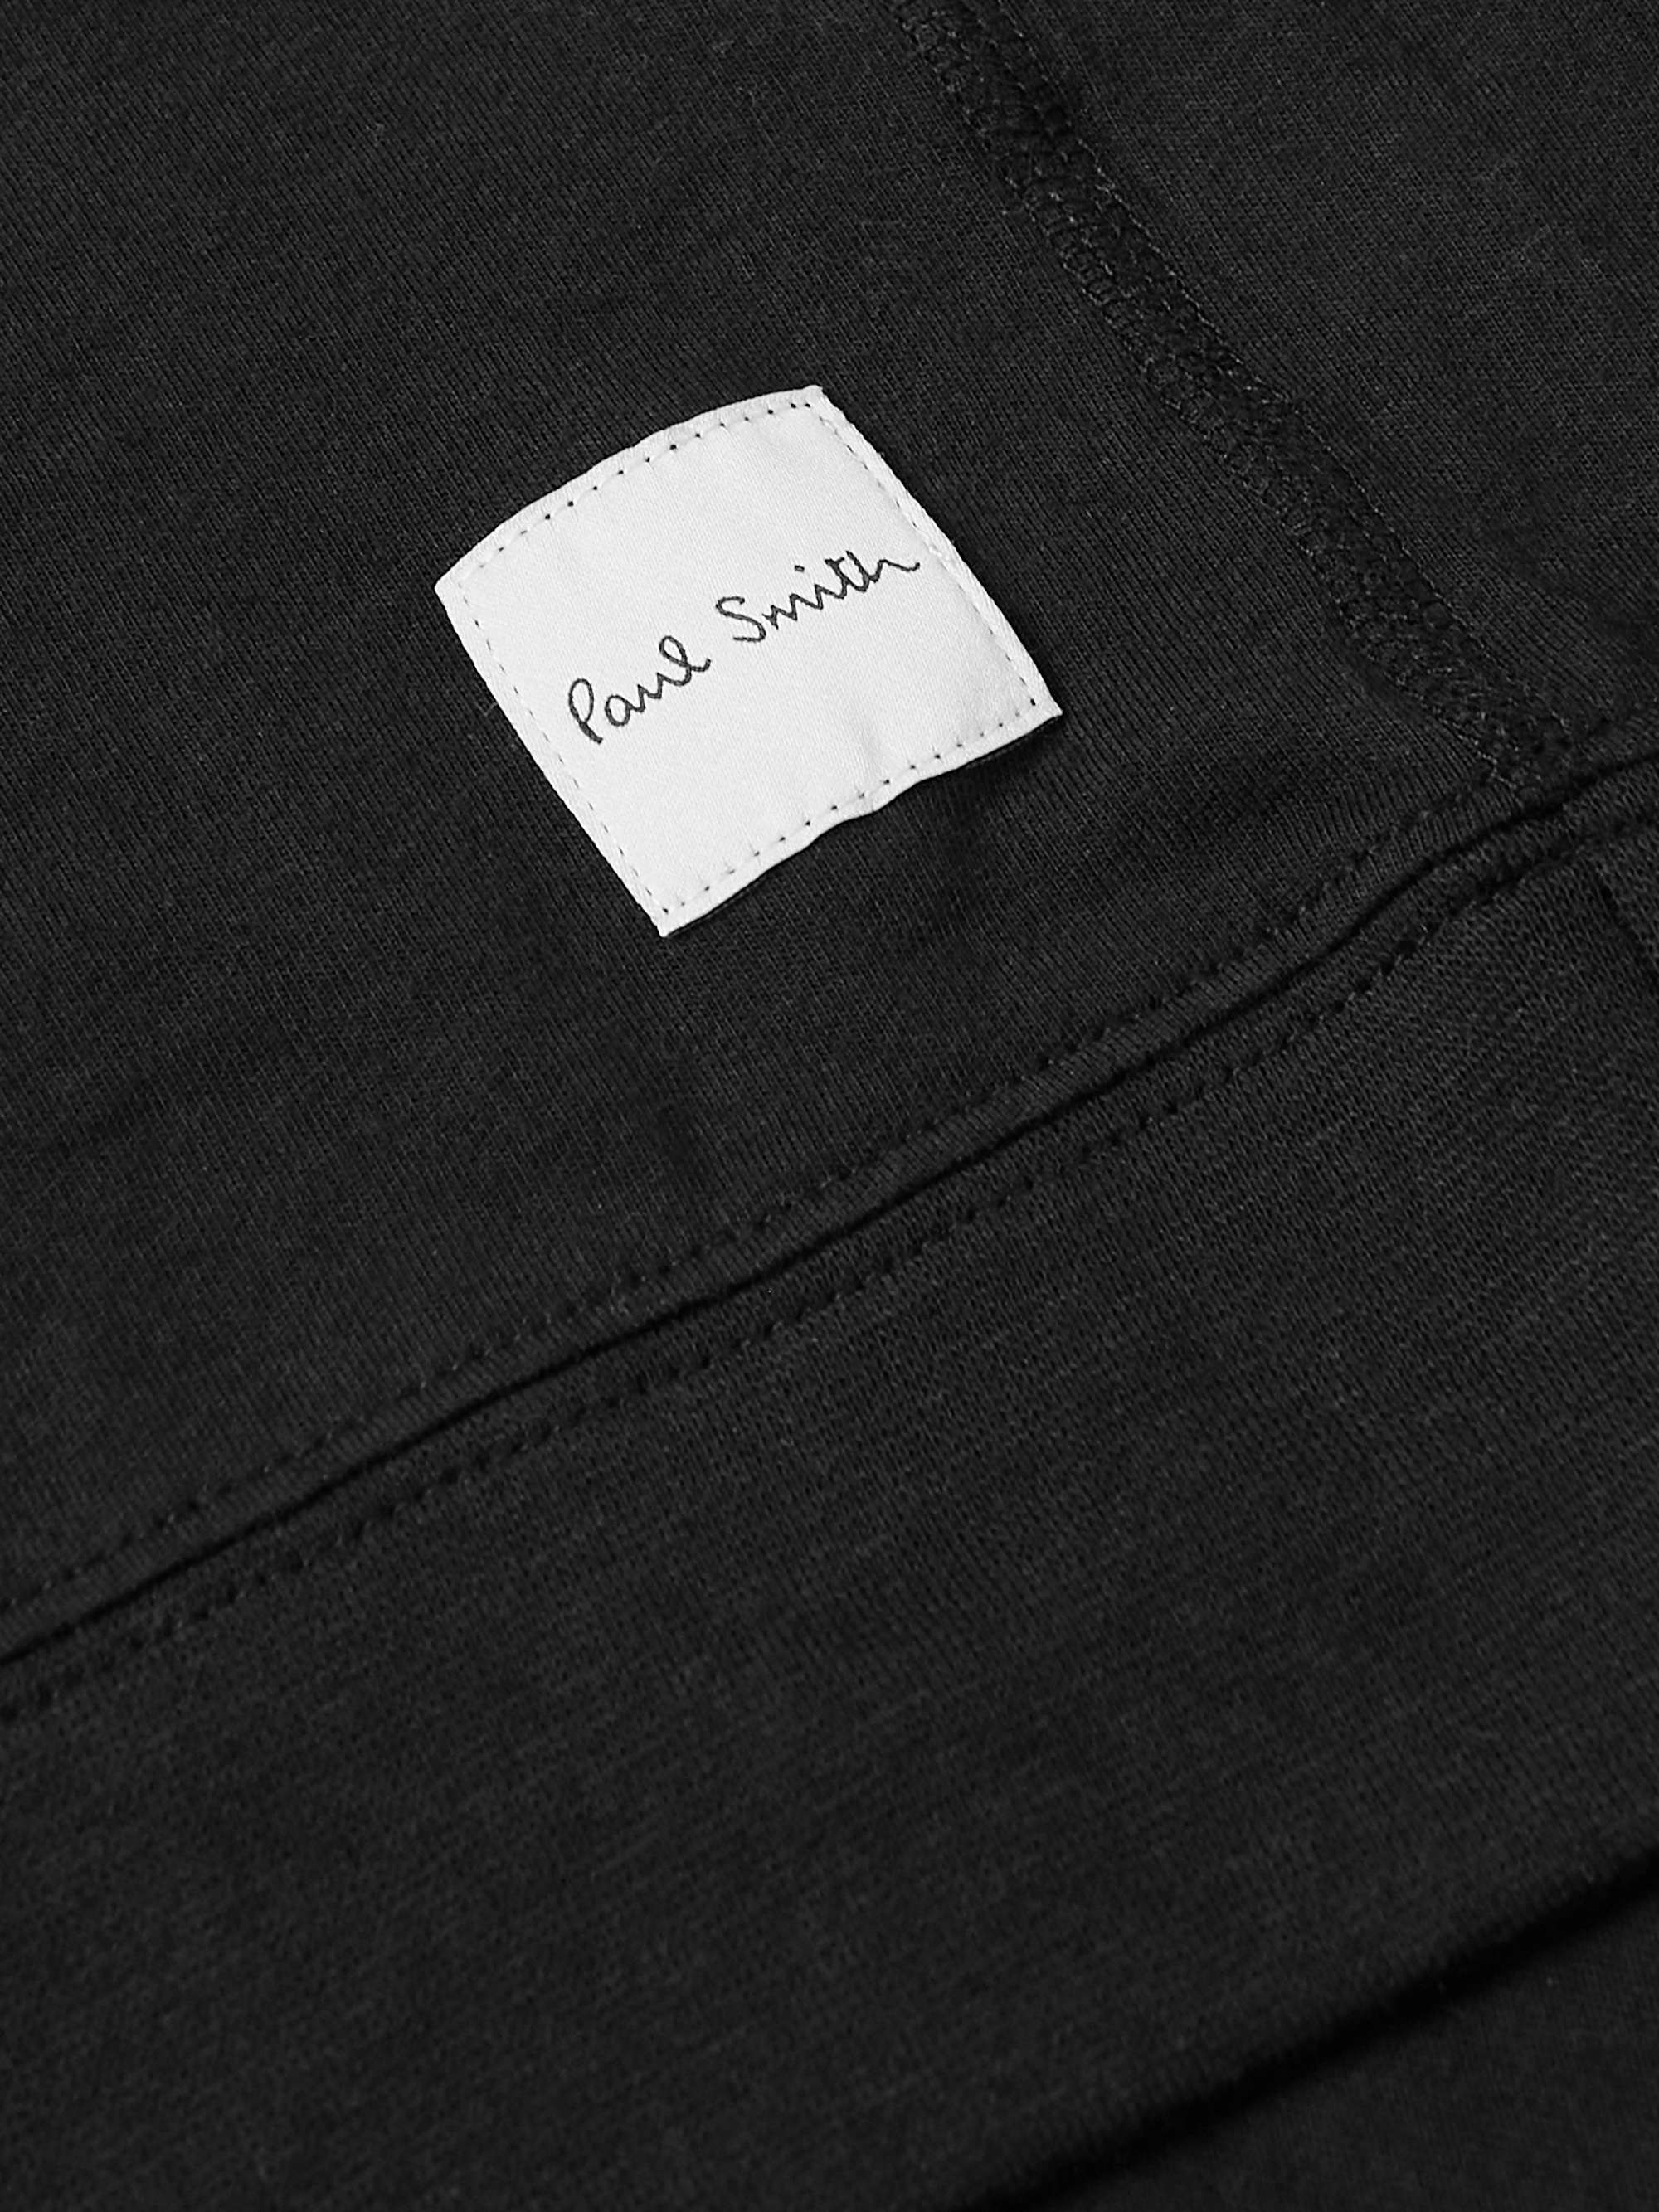 PAUL SMITH Slim-Fit Cotton-Jersey T-Shirt